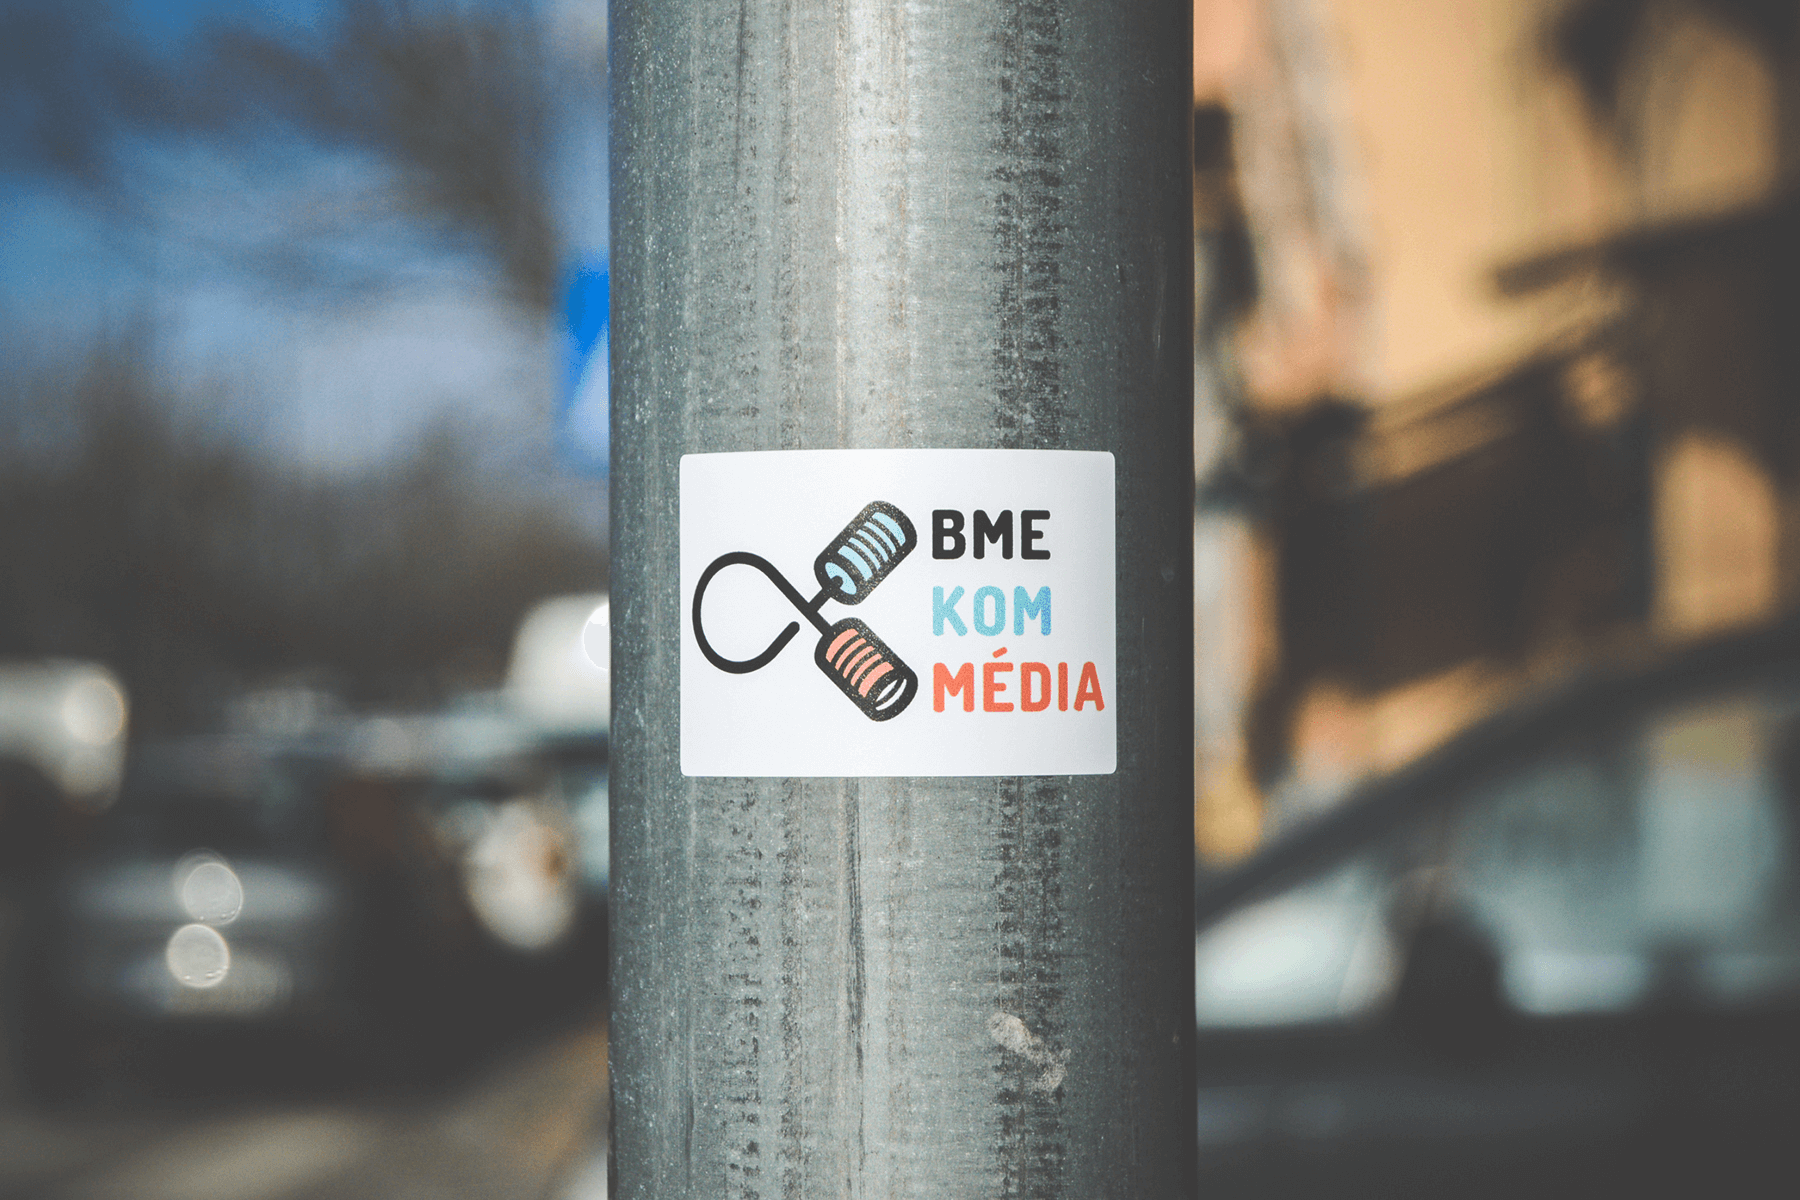 BME KomMedia stickers